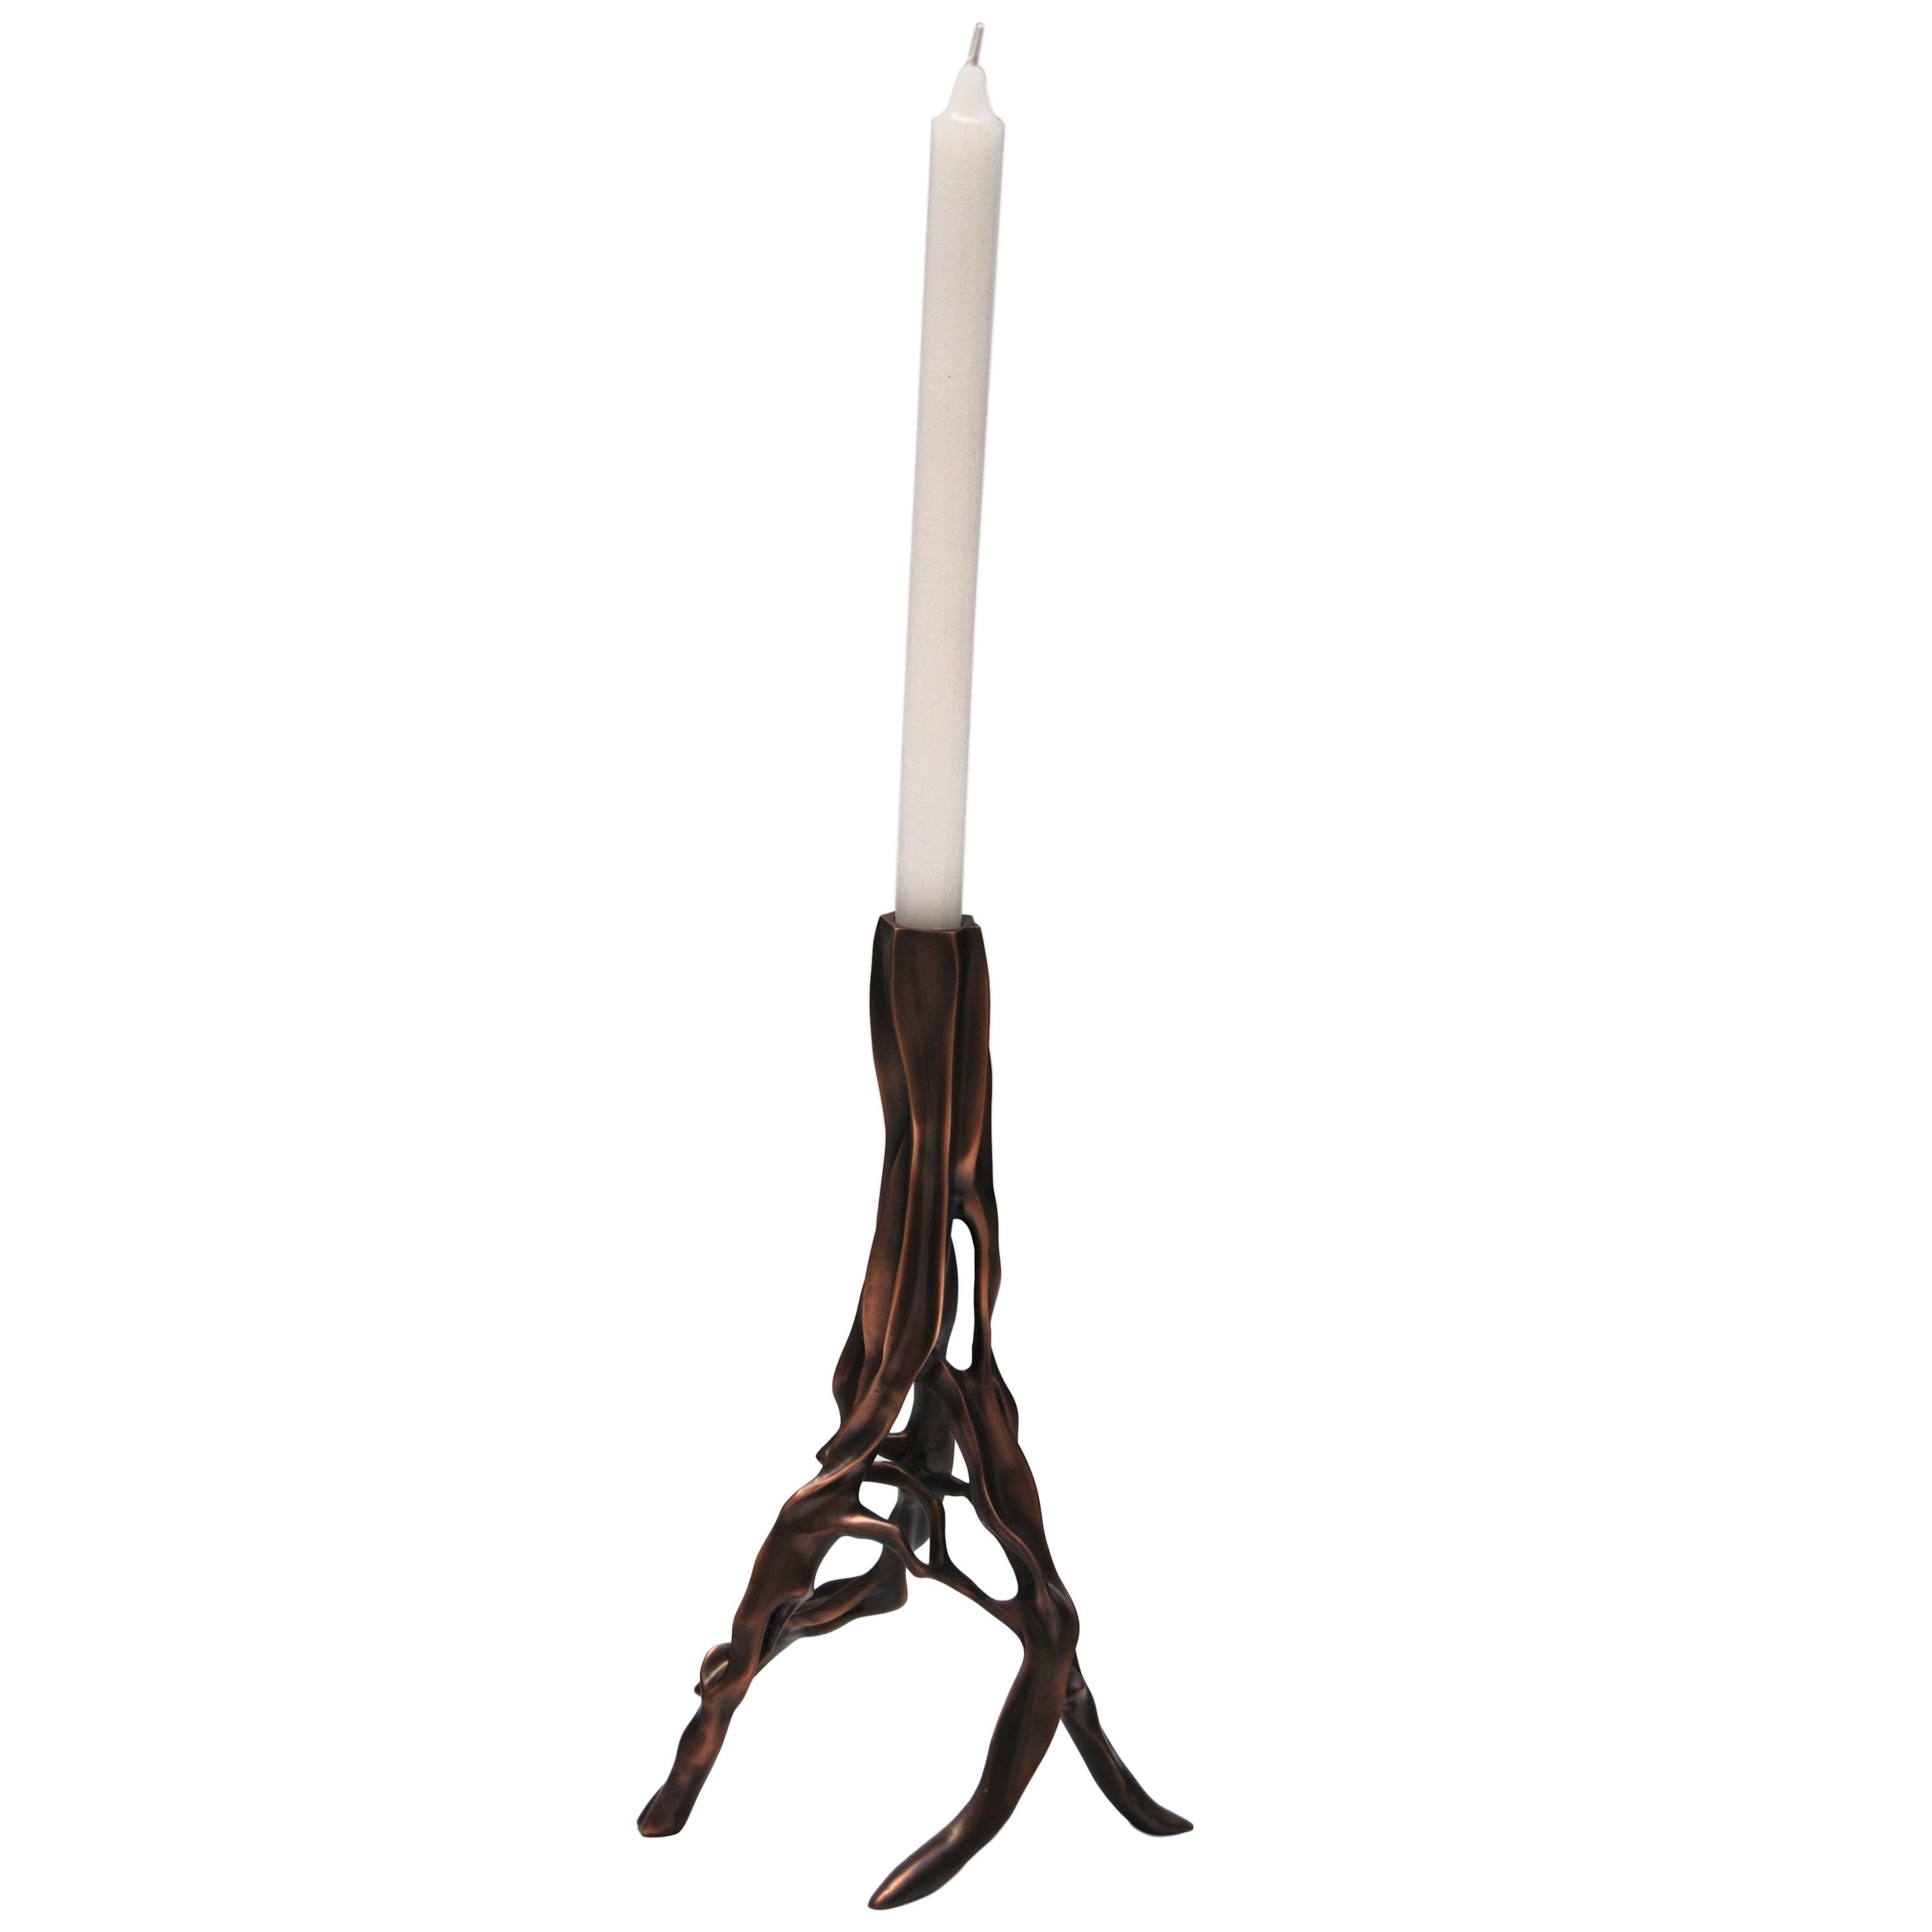 Candlestick in Dark Bronze by FAKASAKA Design